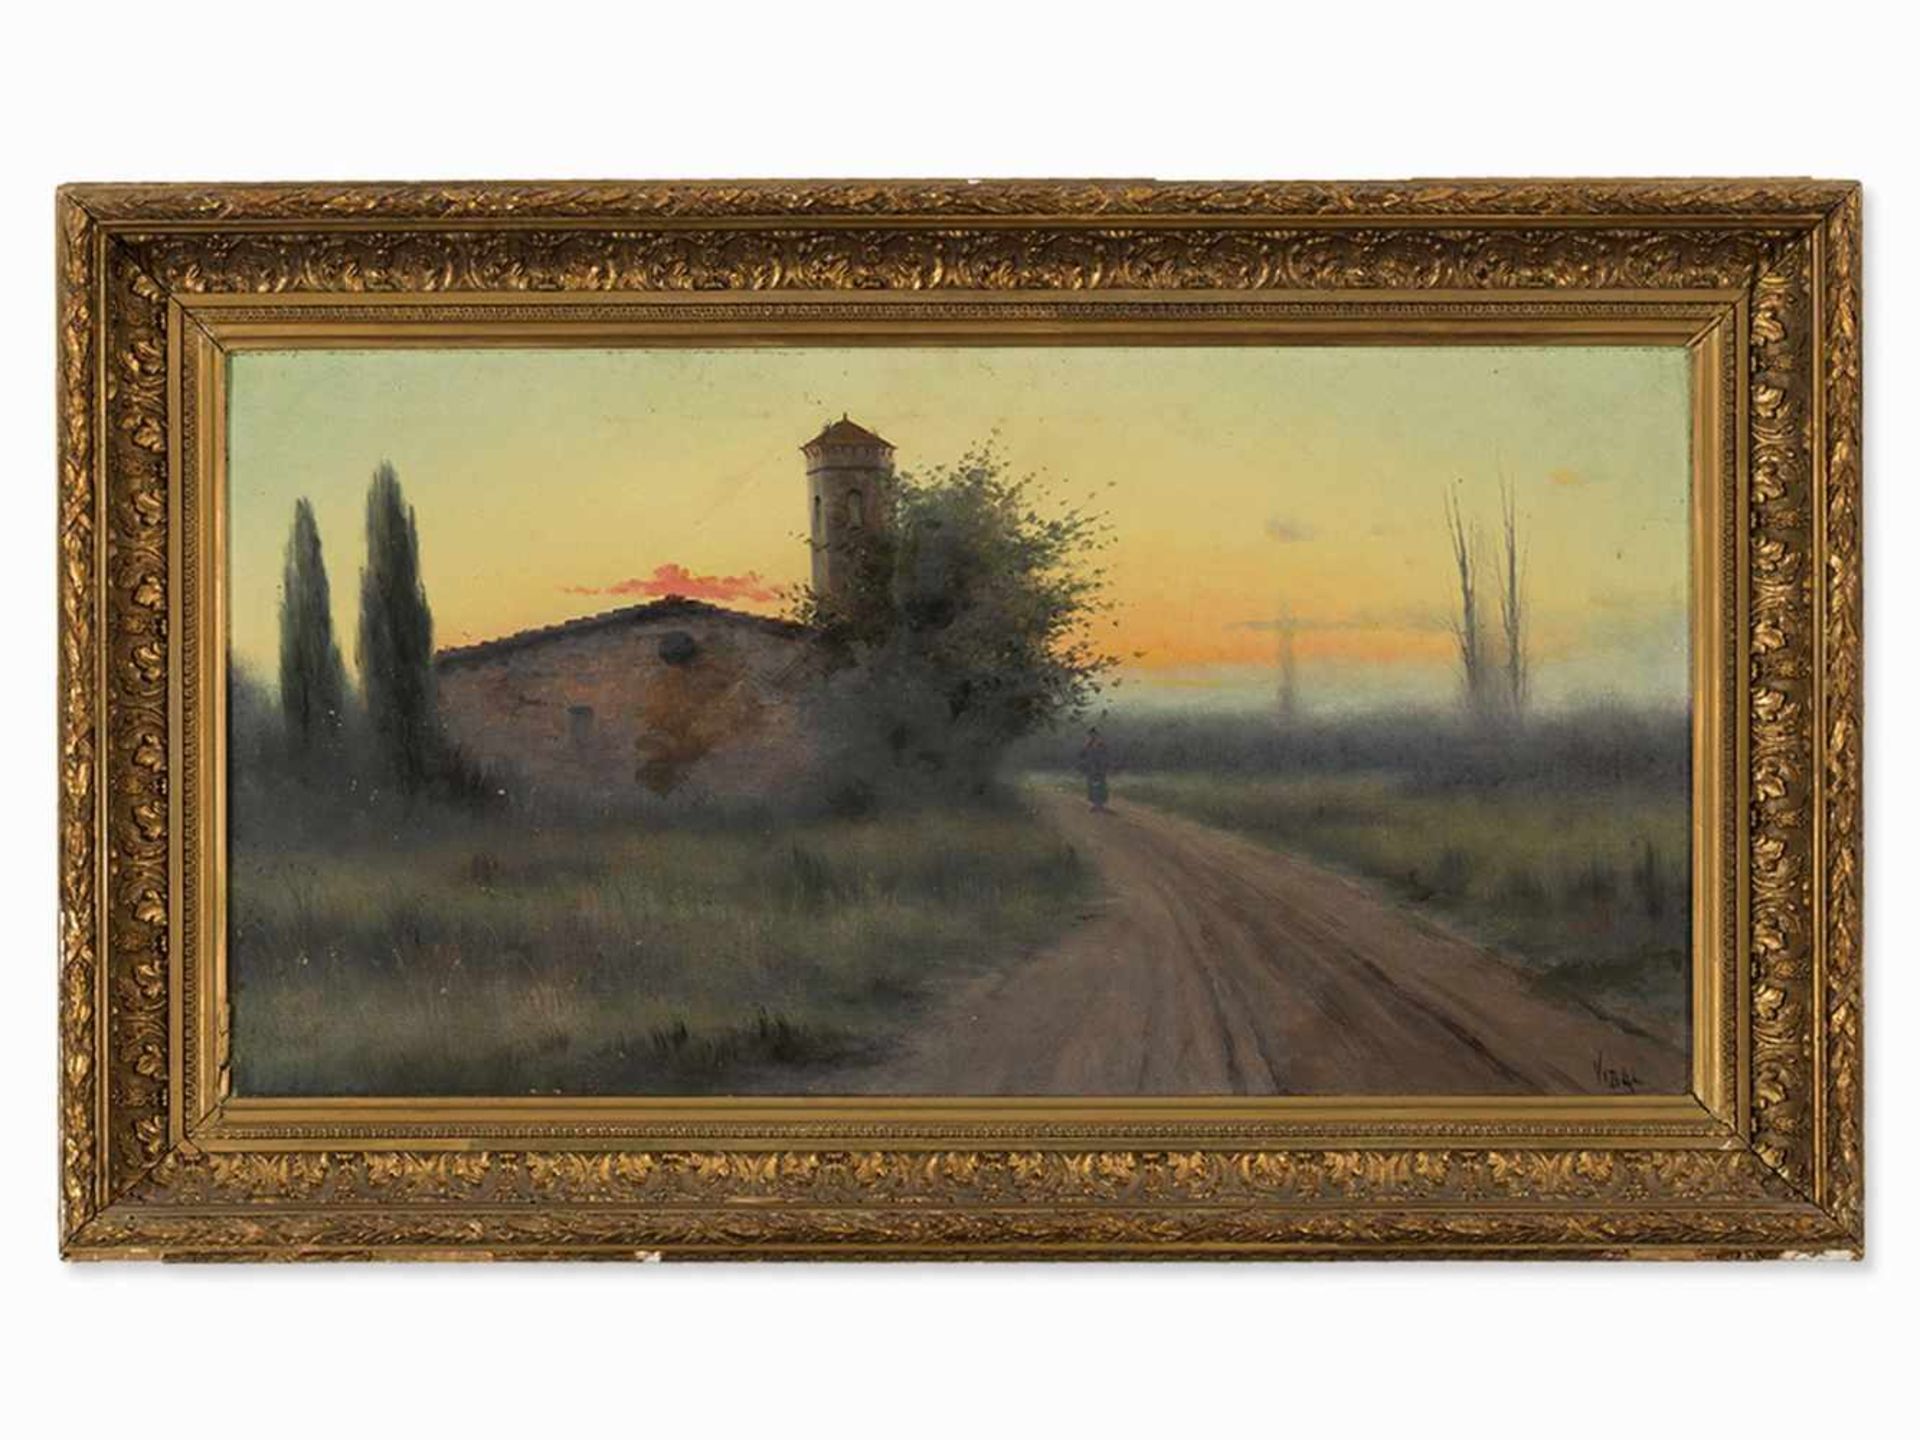 Vidal, Oil Panting, Landscape with Sunset, Spain, 1st H 20th C.